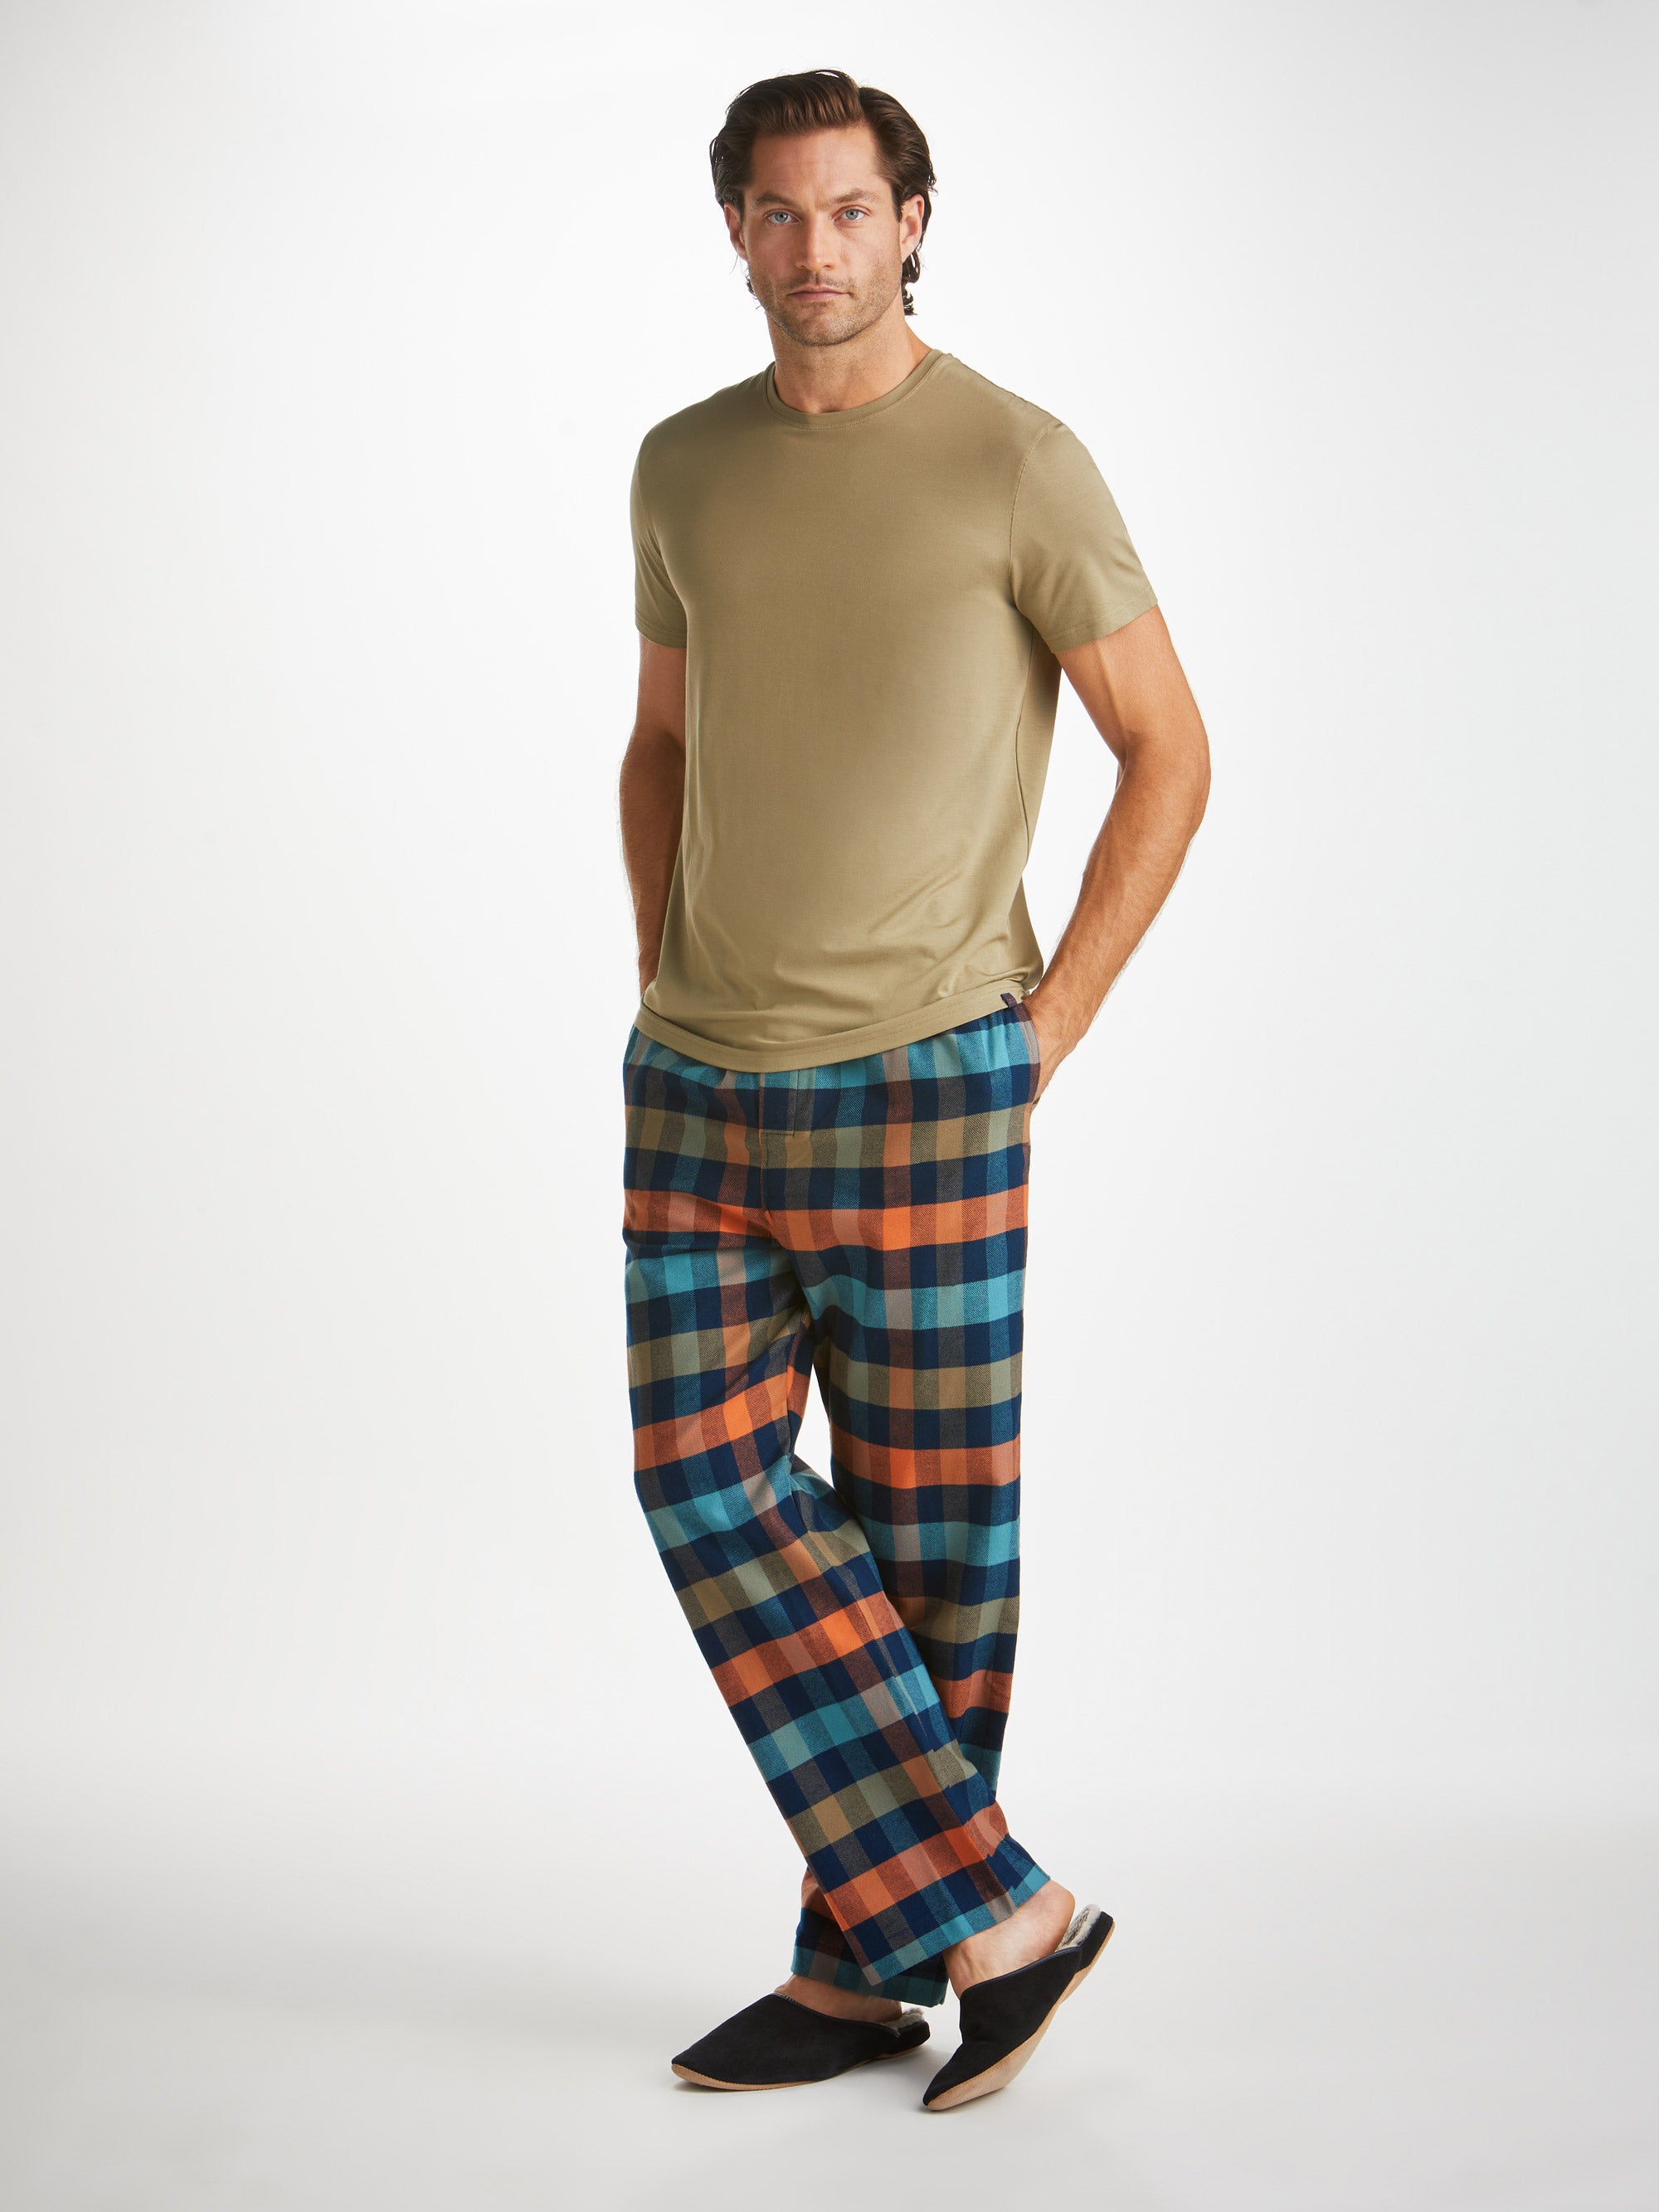 Stylish Lounge Pants for Men